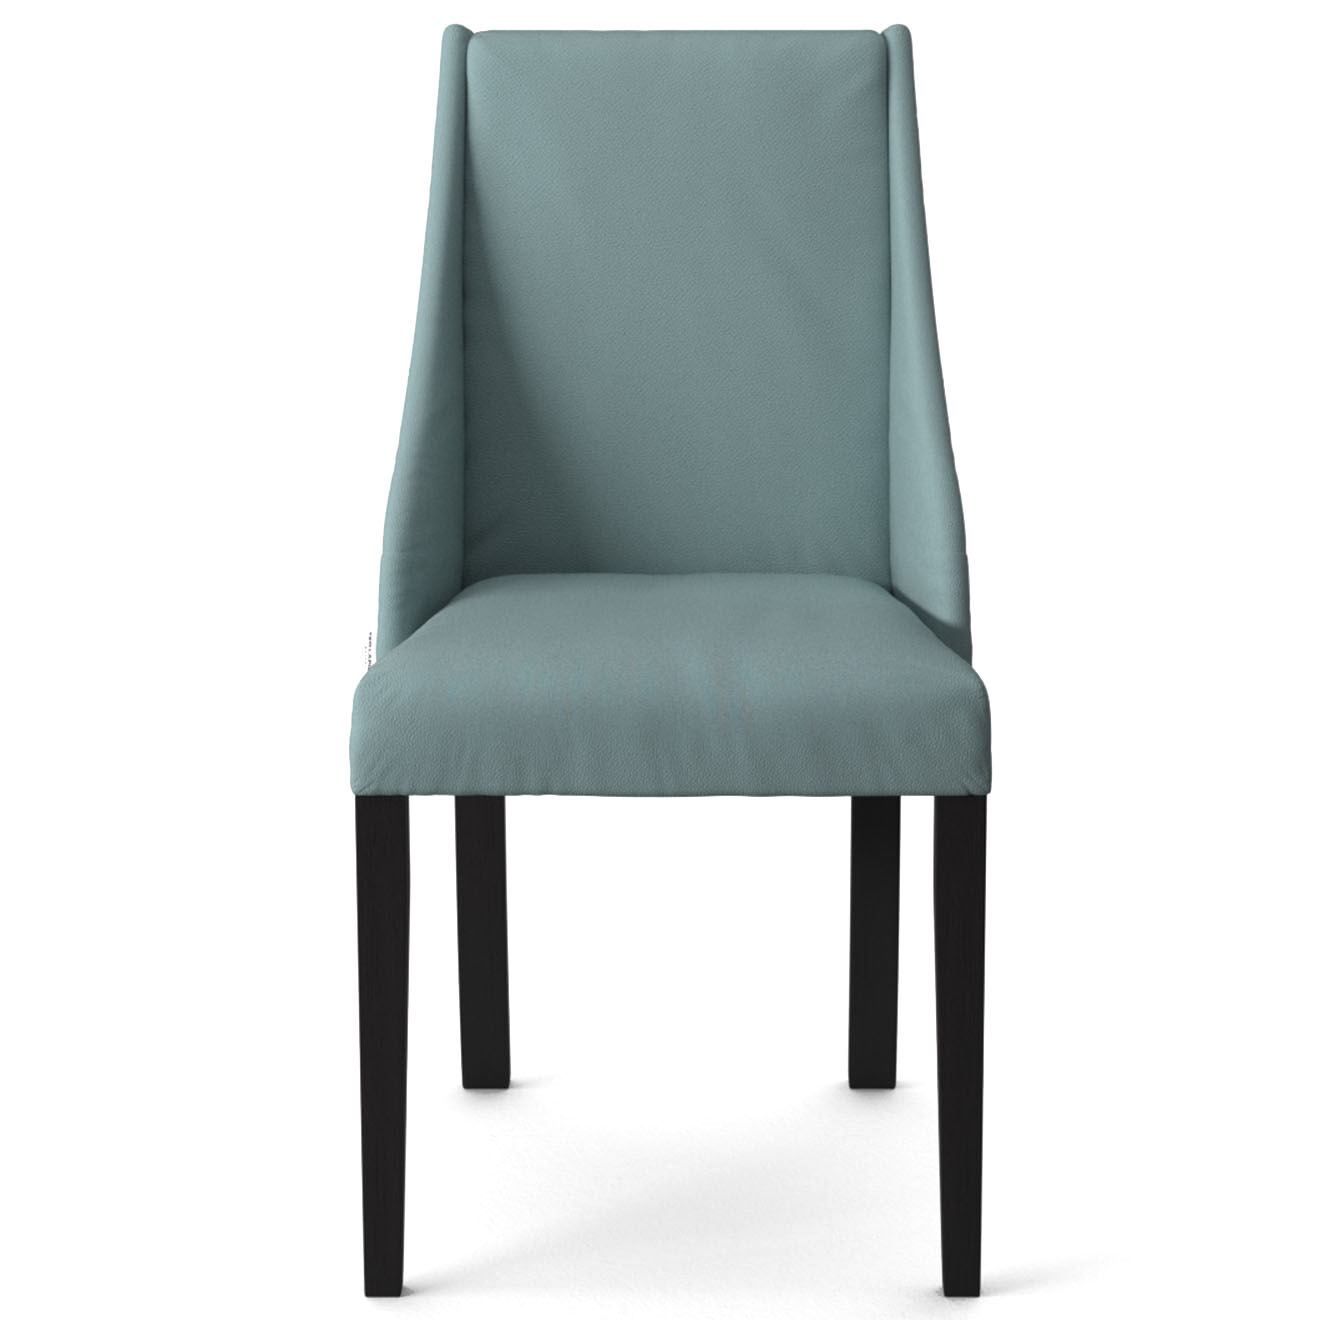 Chaise Absolu toucher simili turquoise - 46x54x87 cm